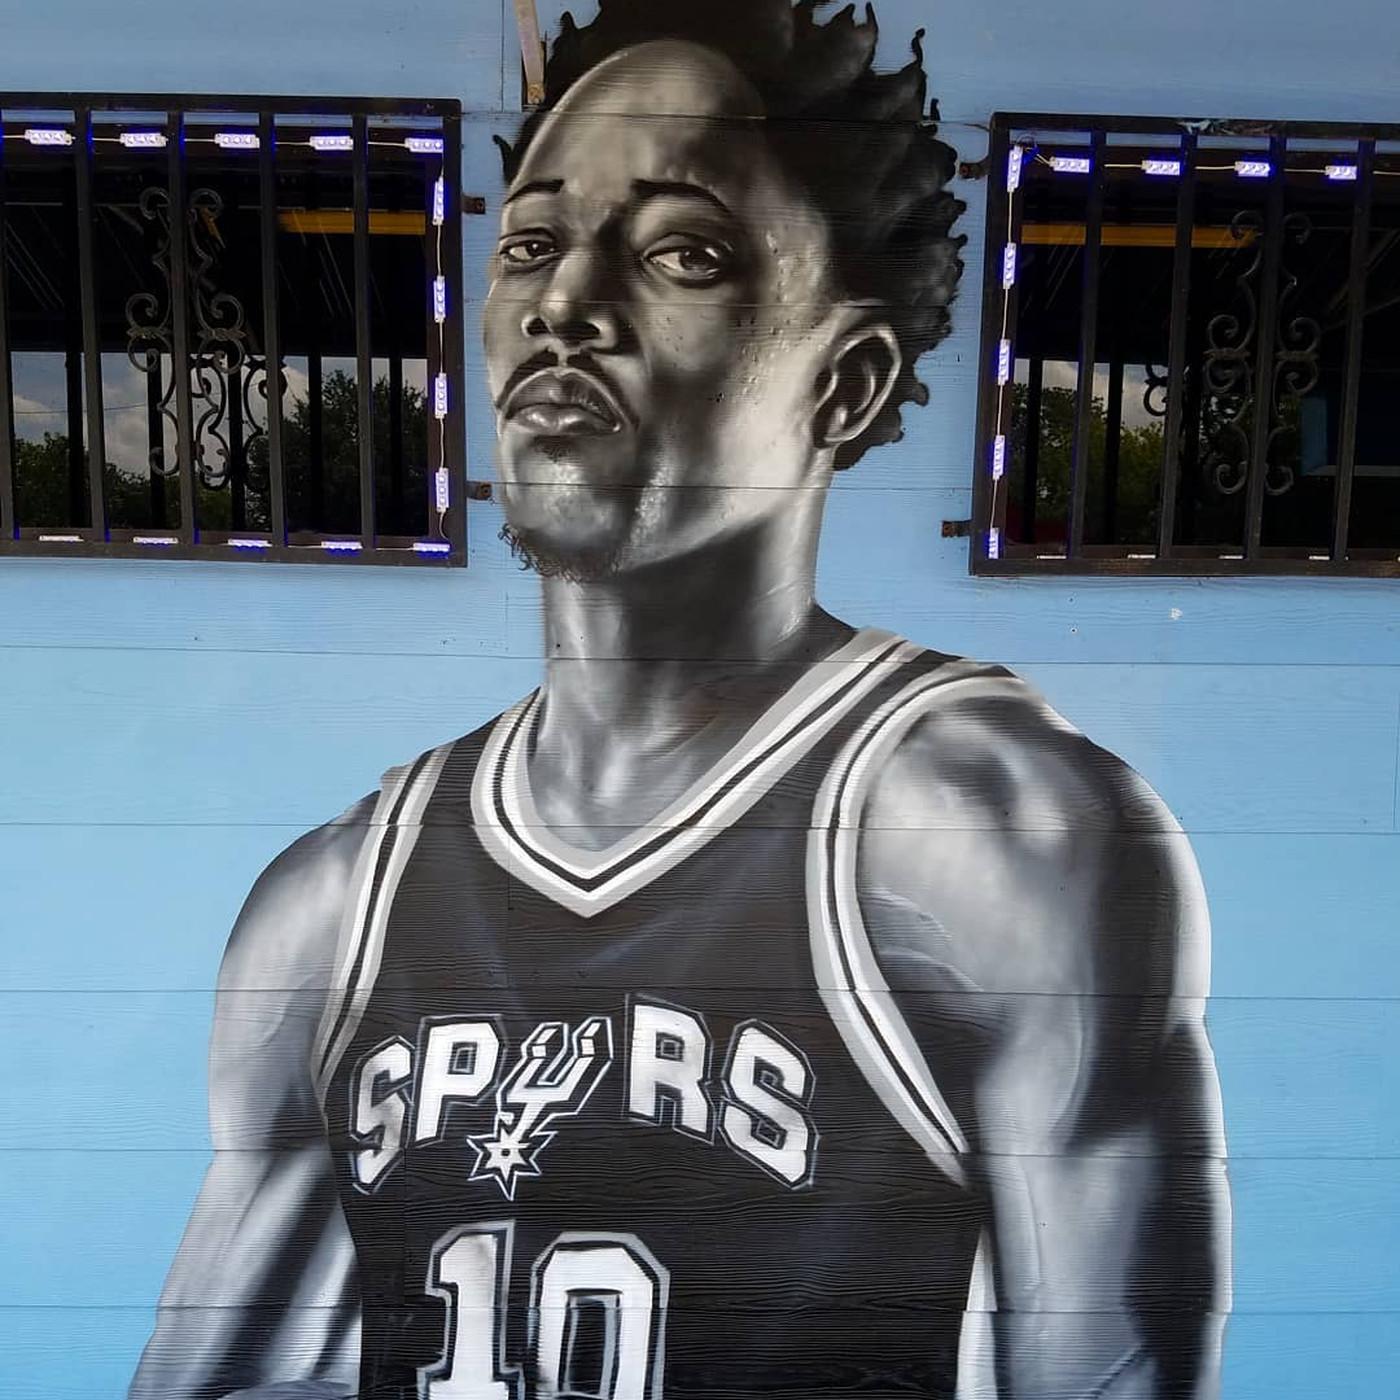 Someone has already painted a mural of DeMar DeRozan in San Antonio